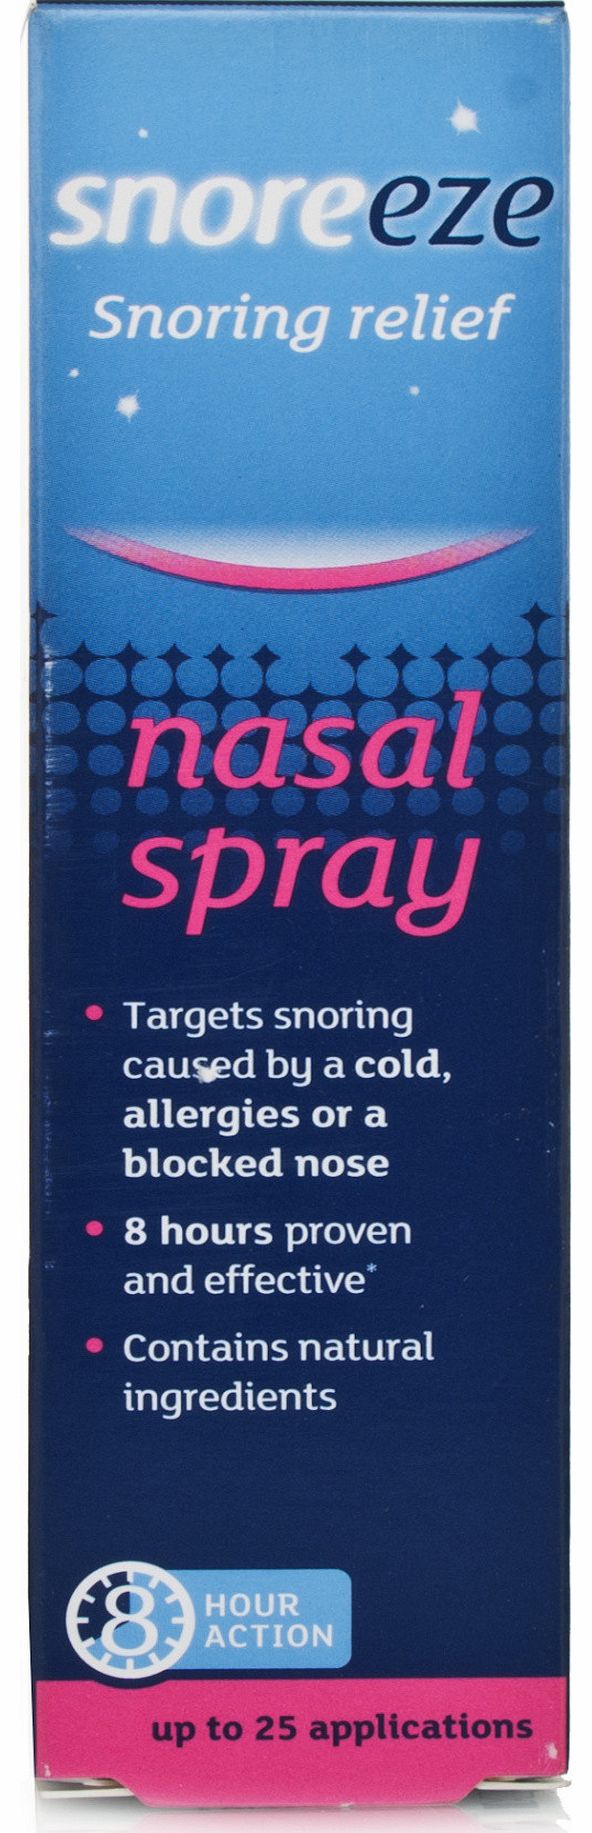 Snoreeze Nasal Spray